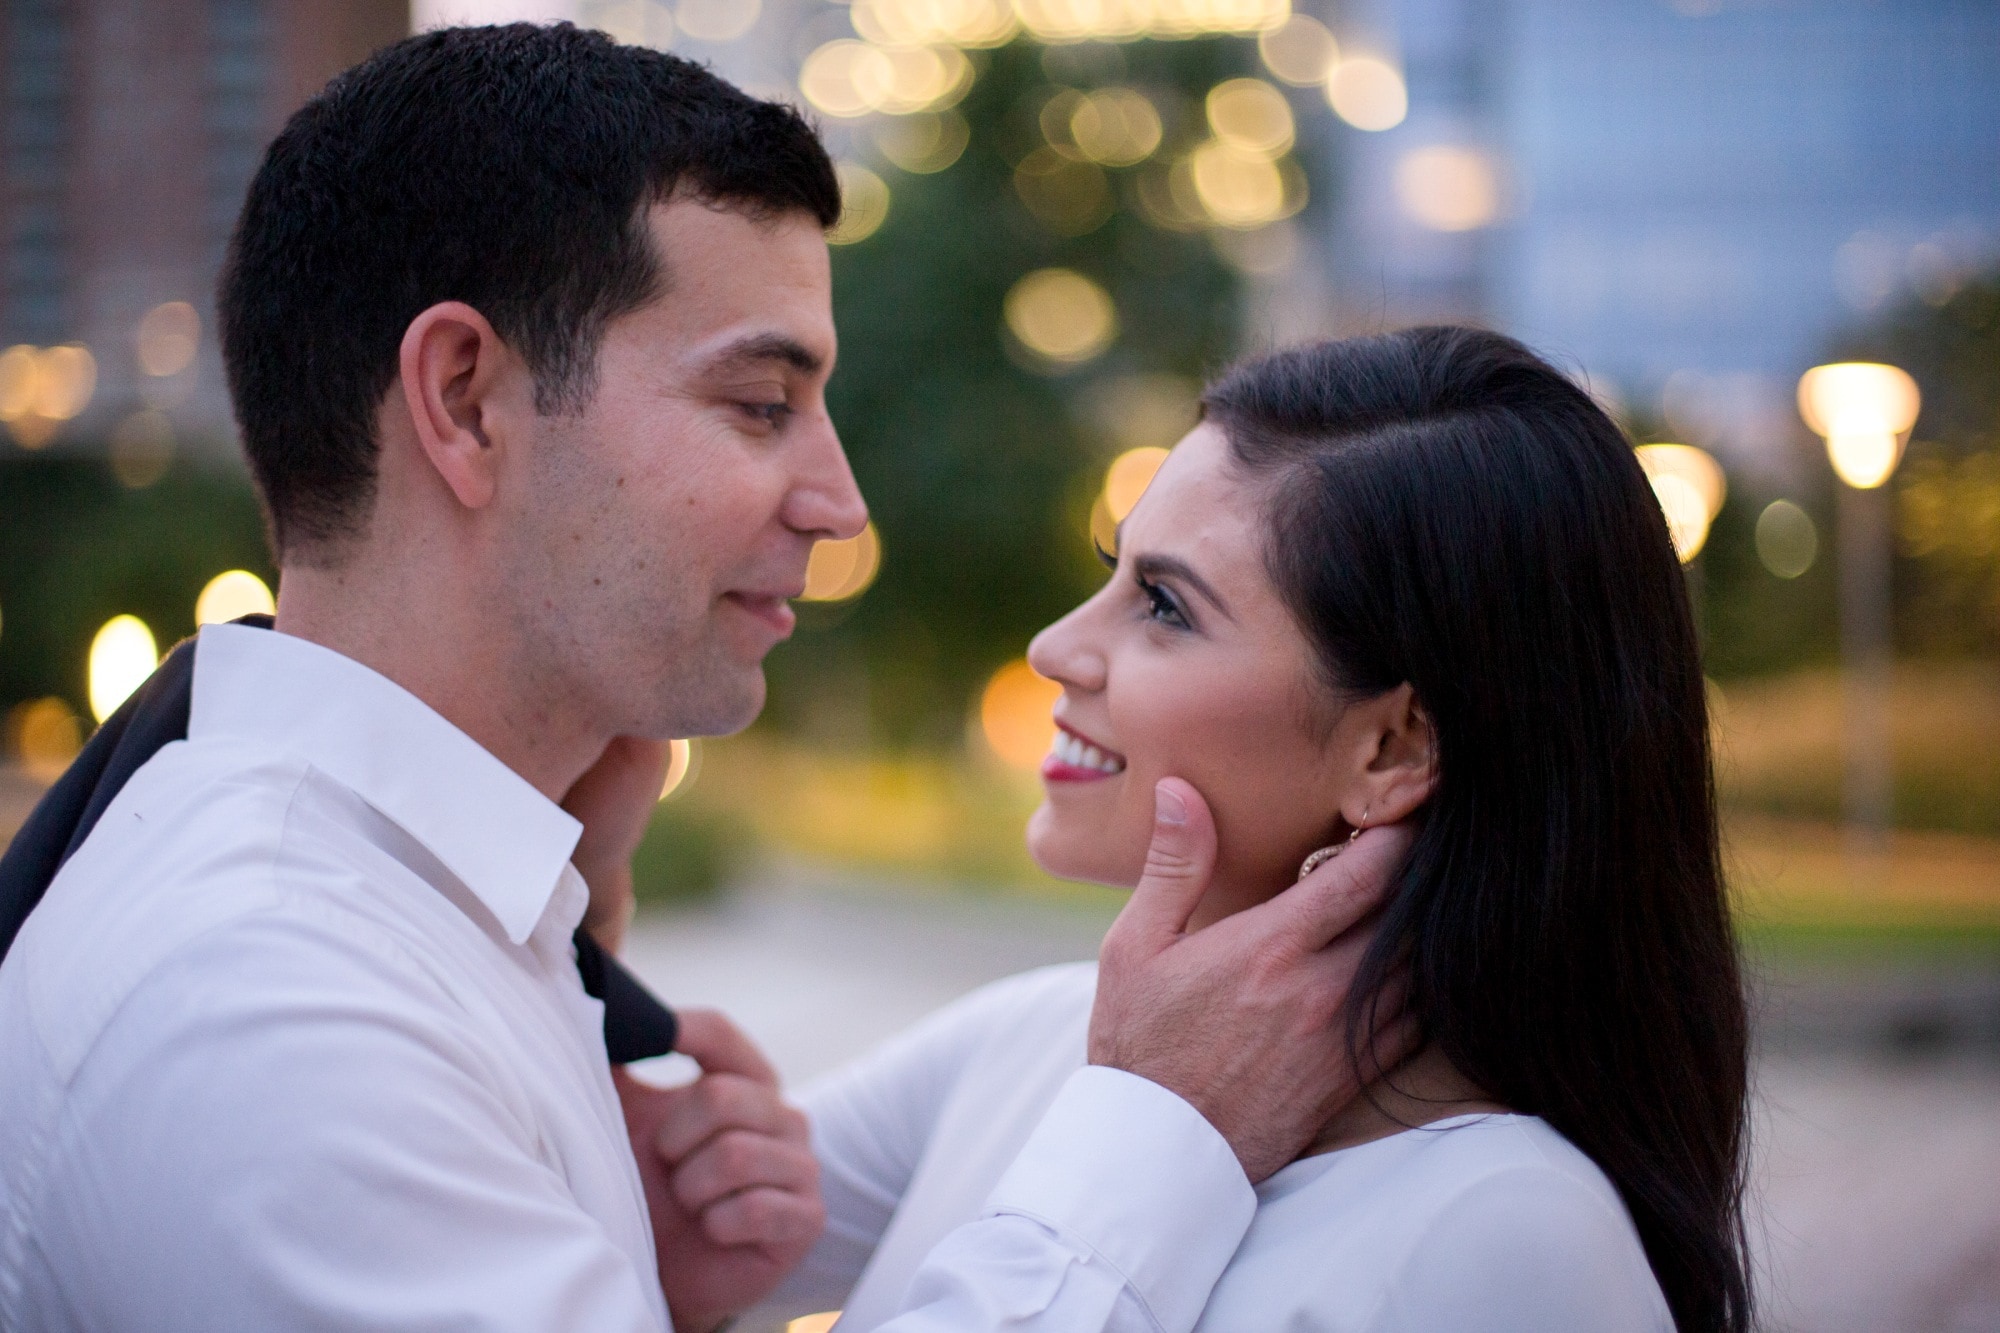 man in white dress shirt kissing woman in black shirt